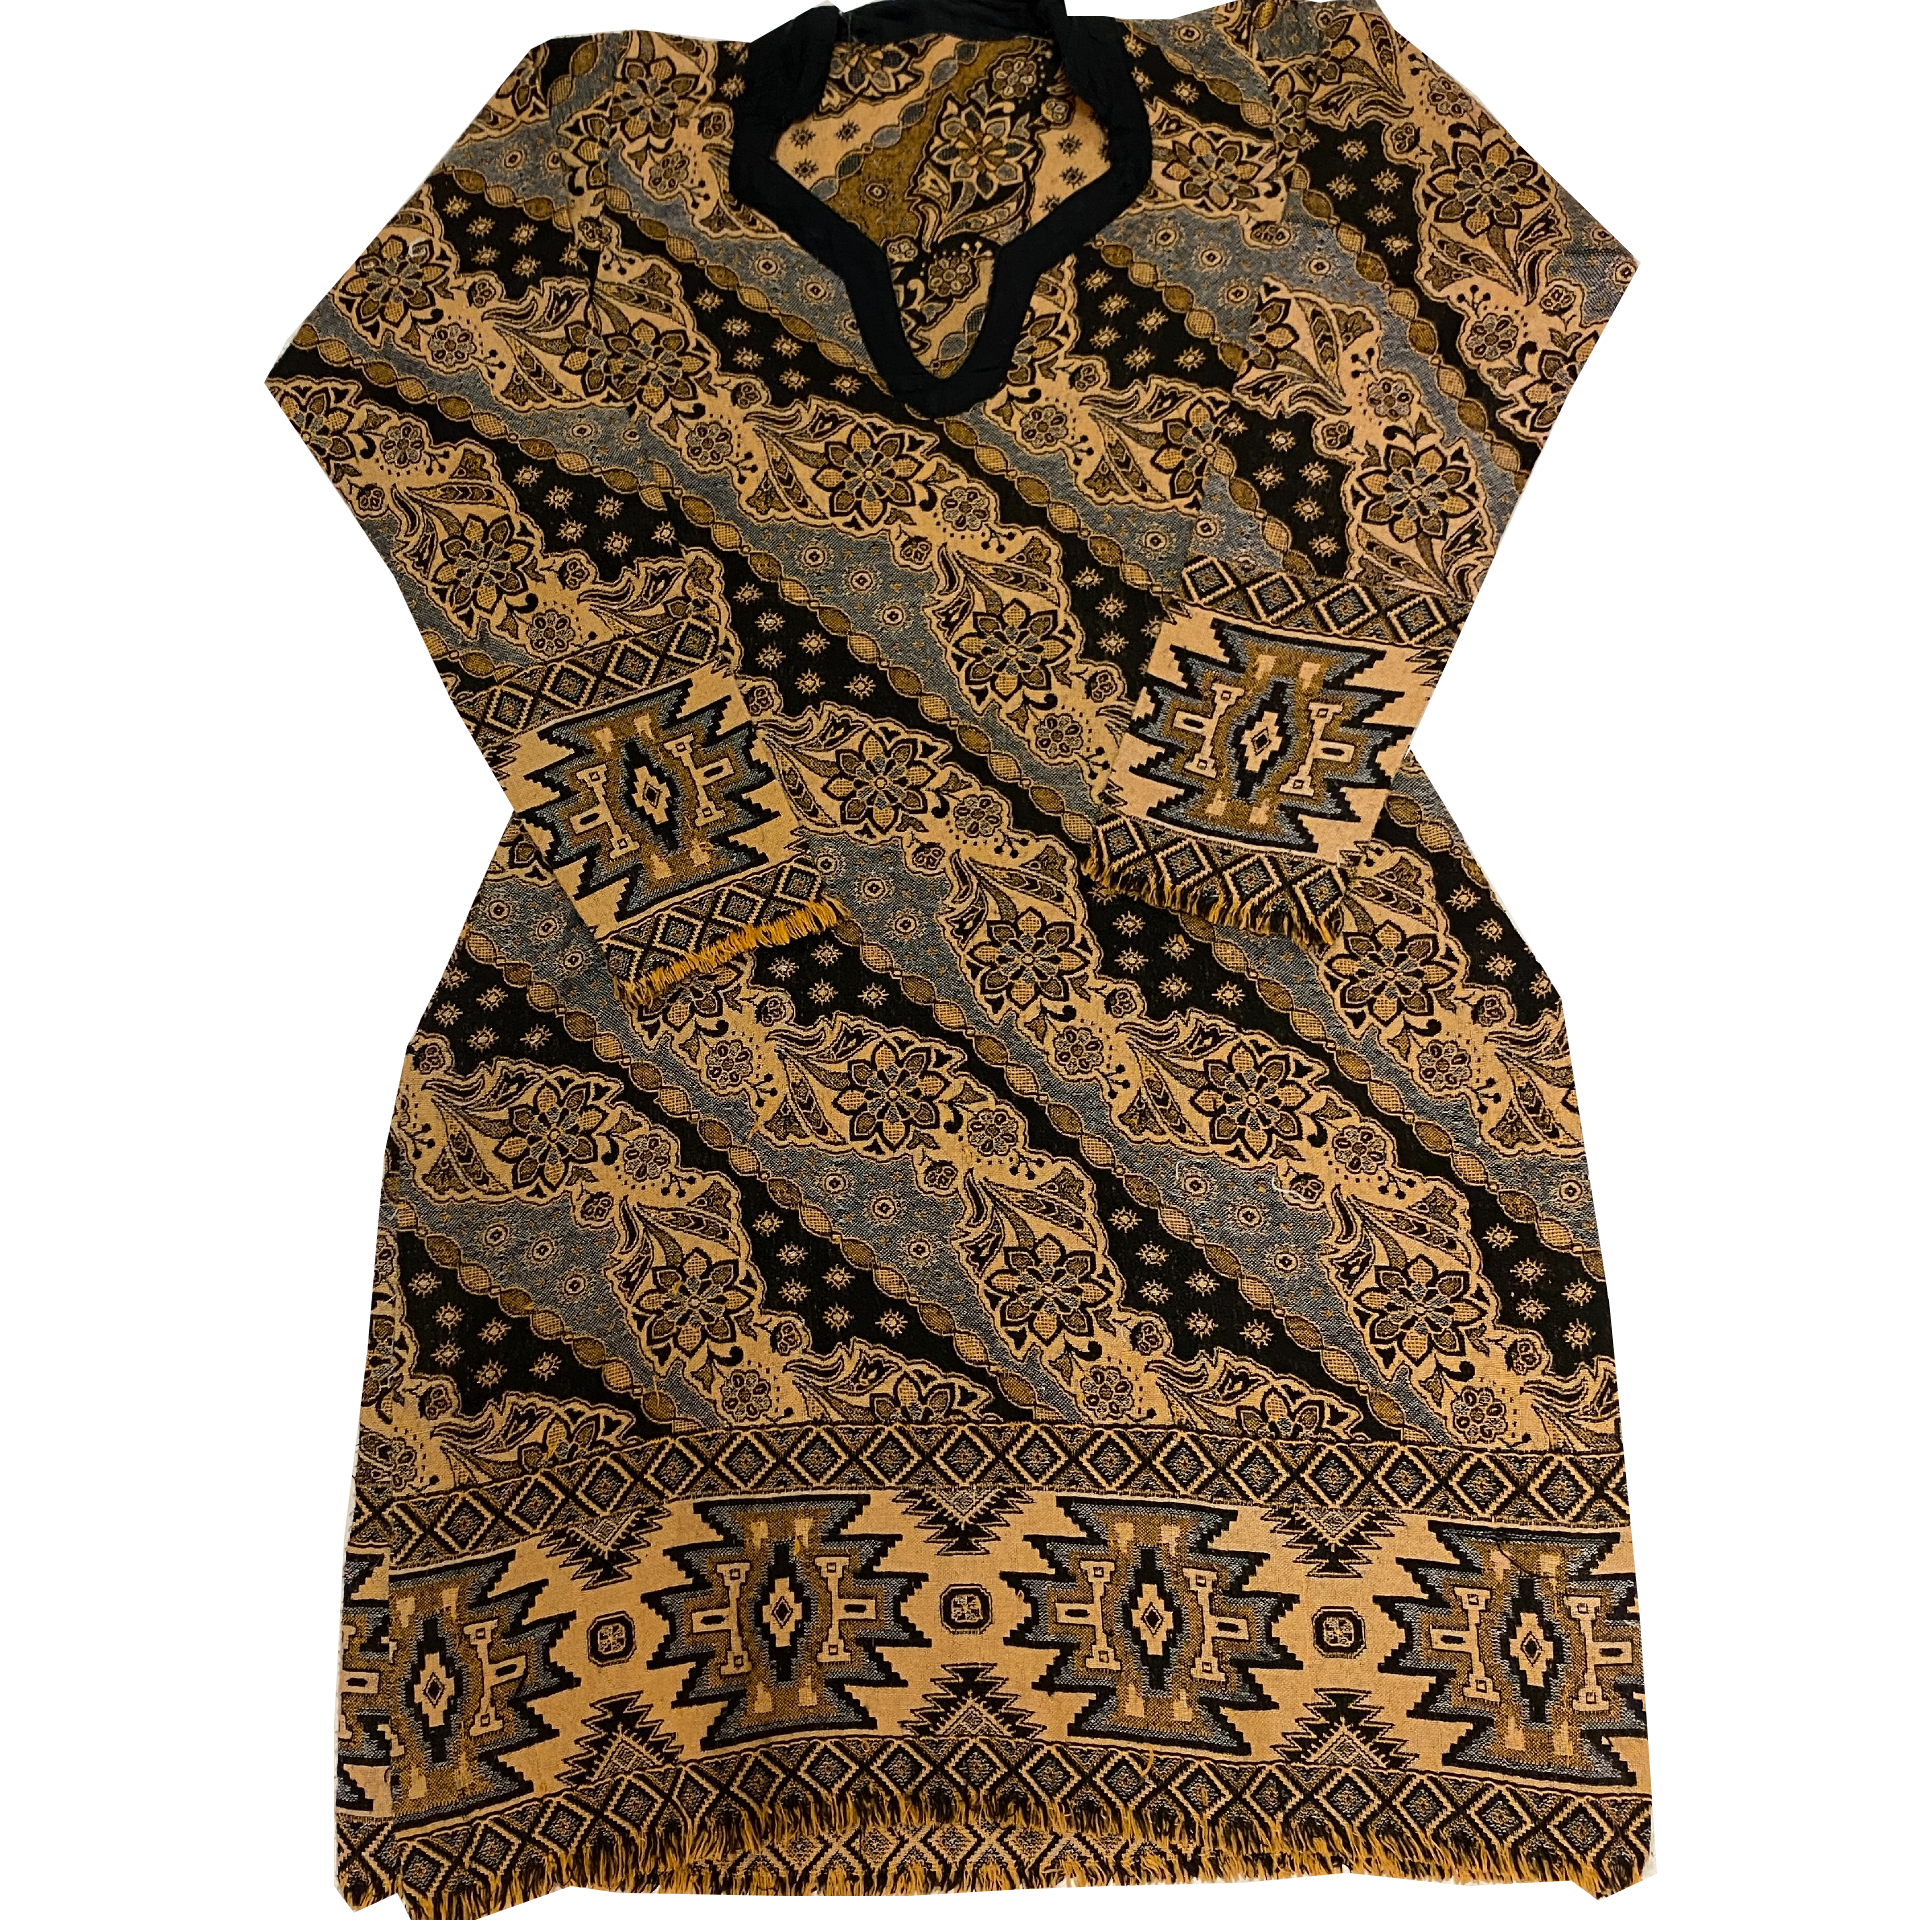 Handmade Woolen Dress - Size 34 - Vintage India NYC